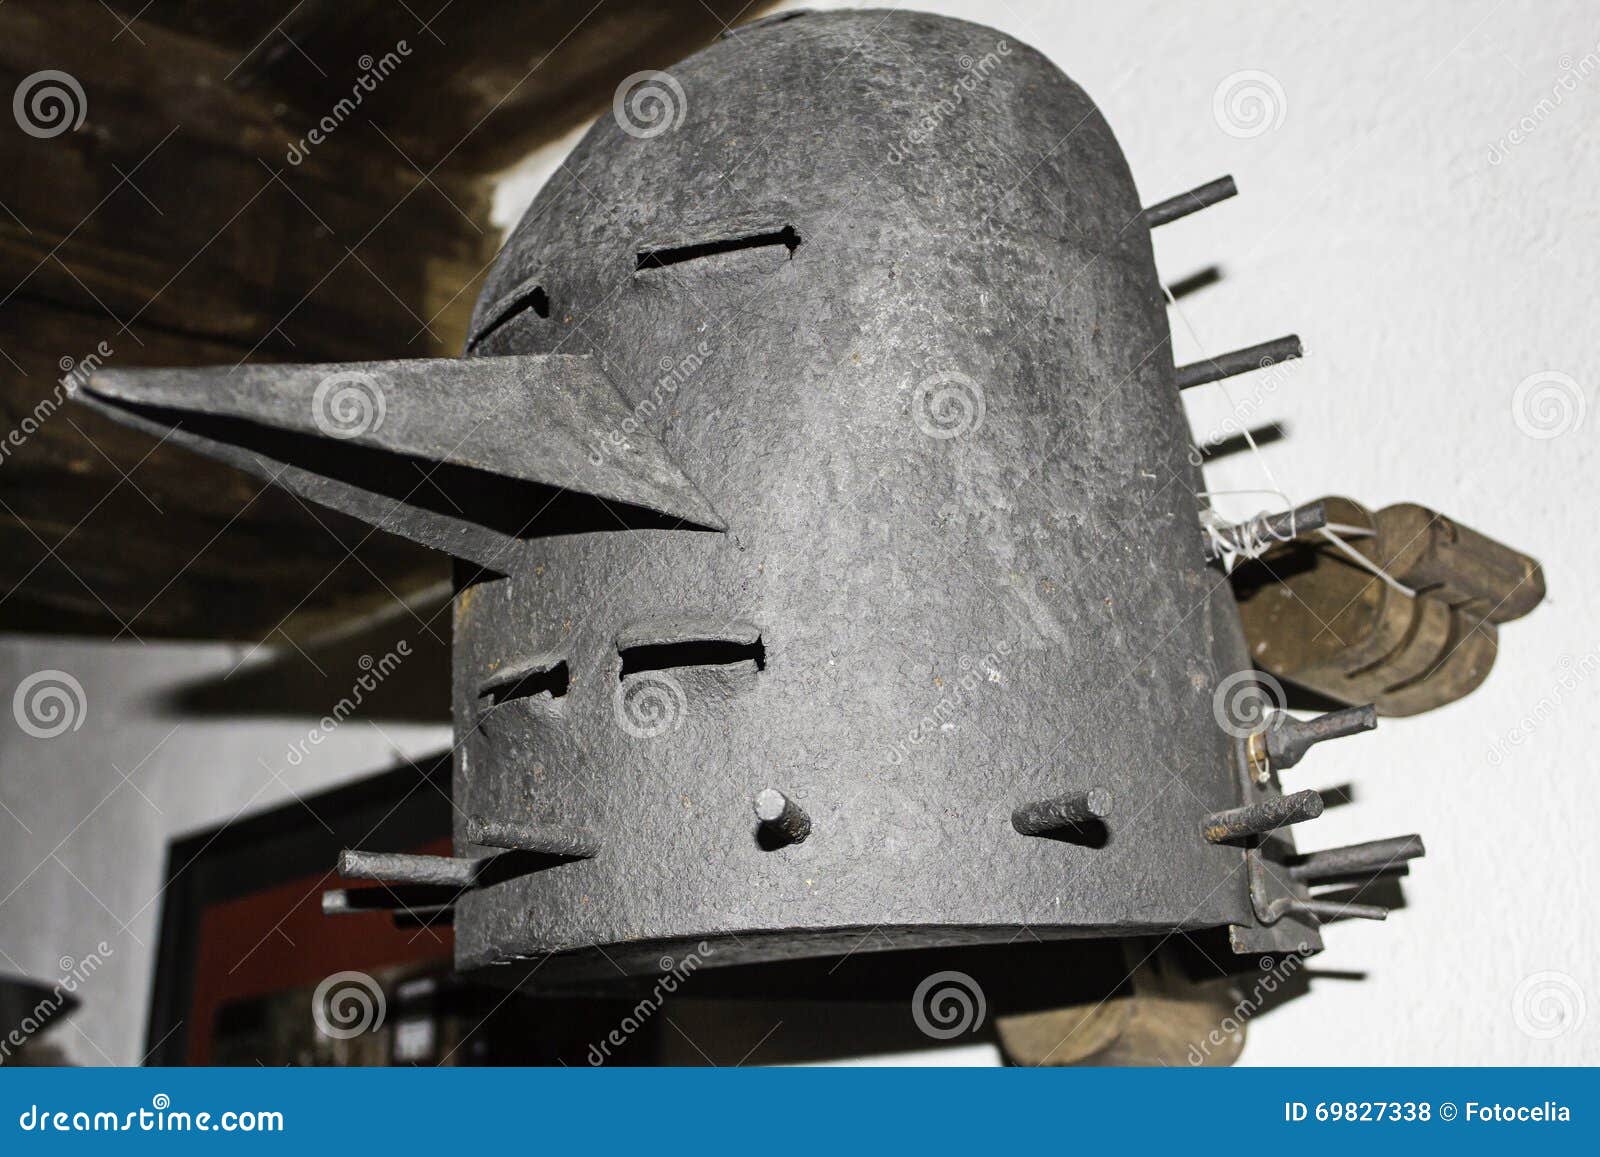 helmet-inquisition-torture-iron-spiked-humiliation-69827338.jpg